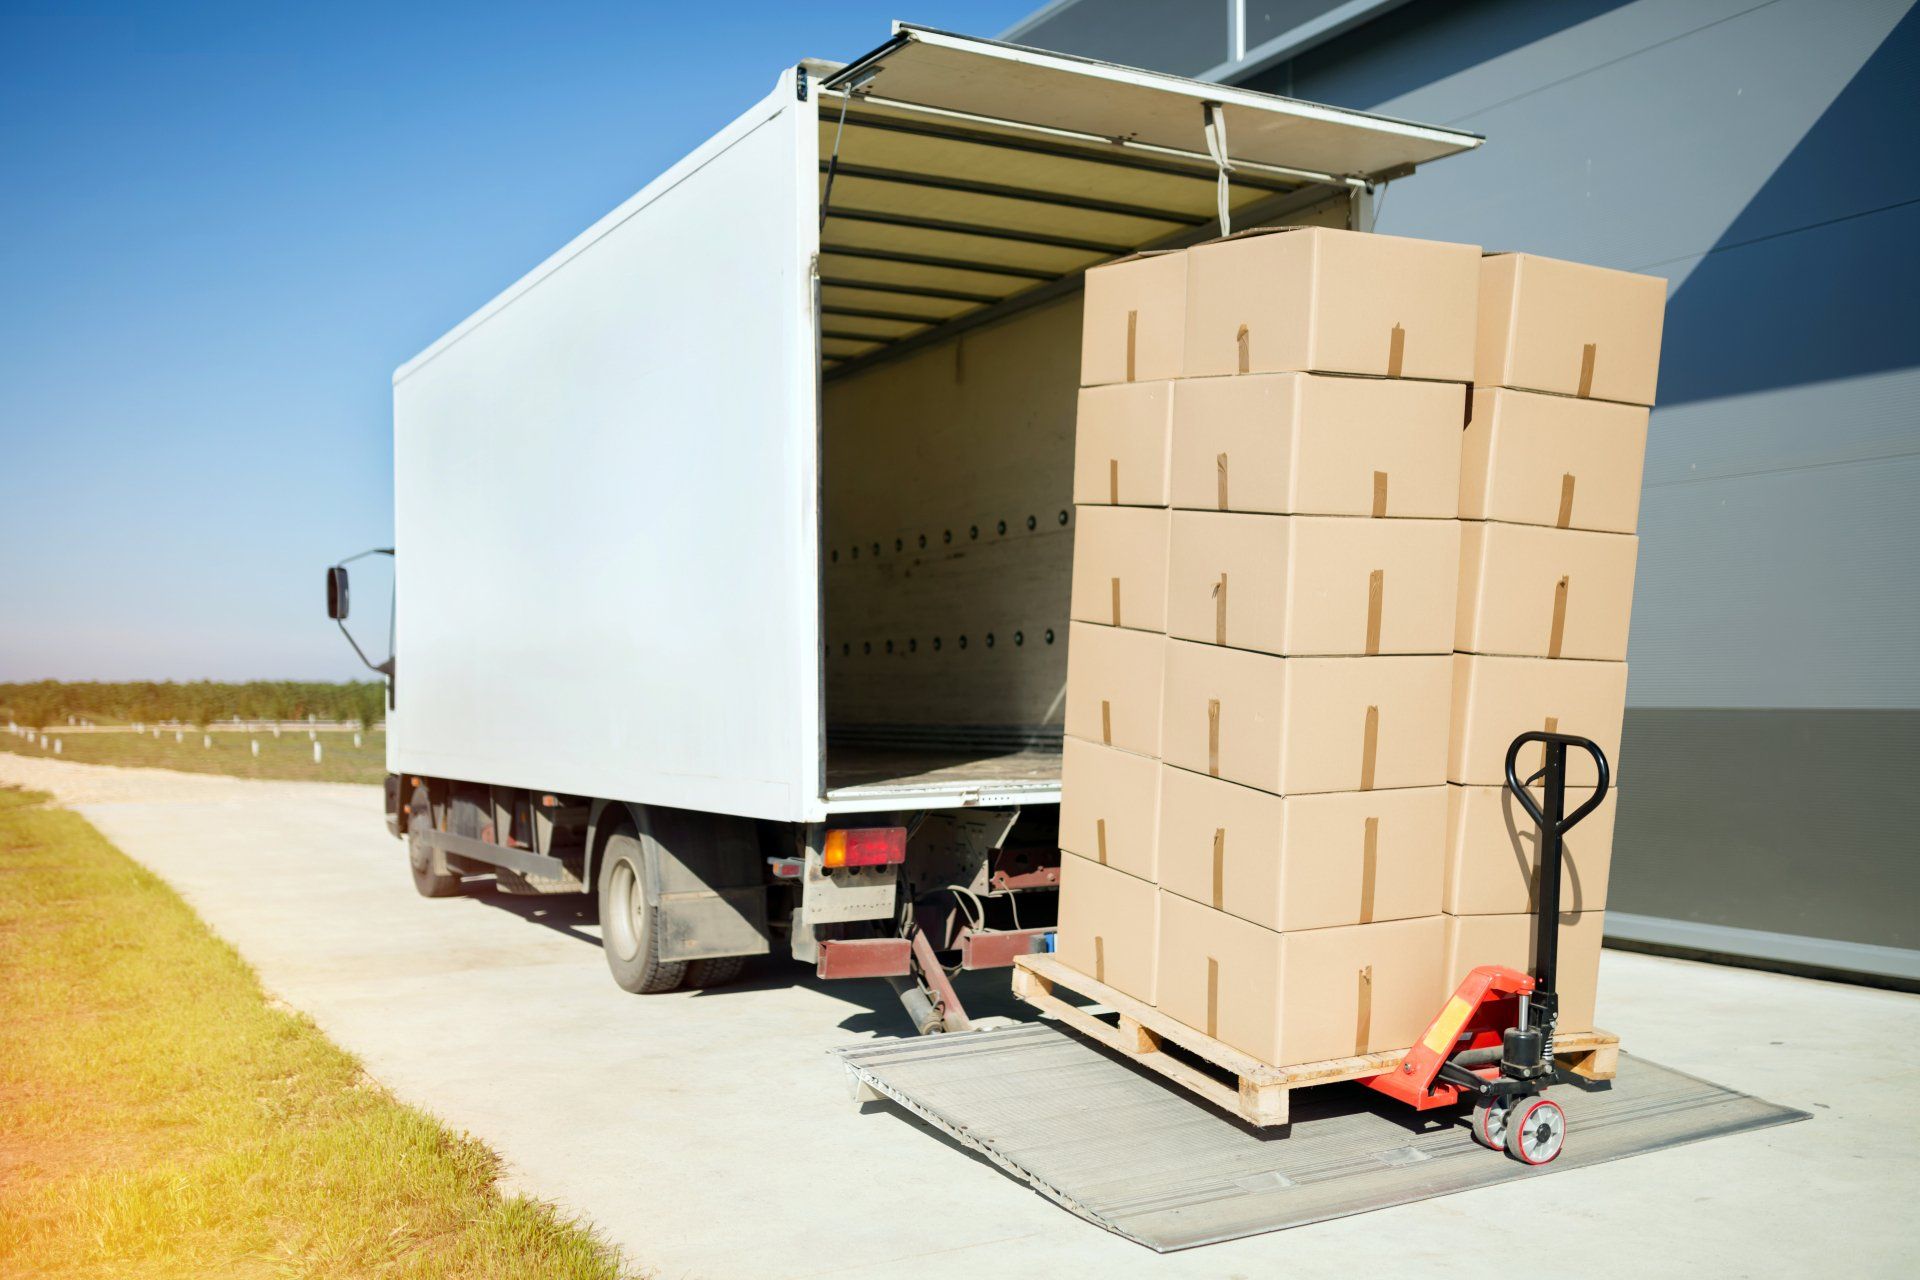 box truck insurance